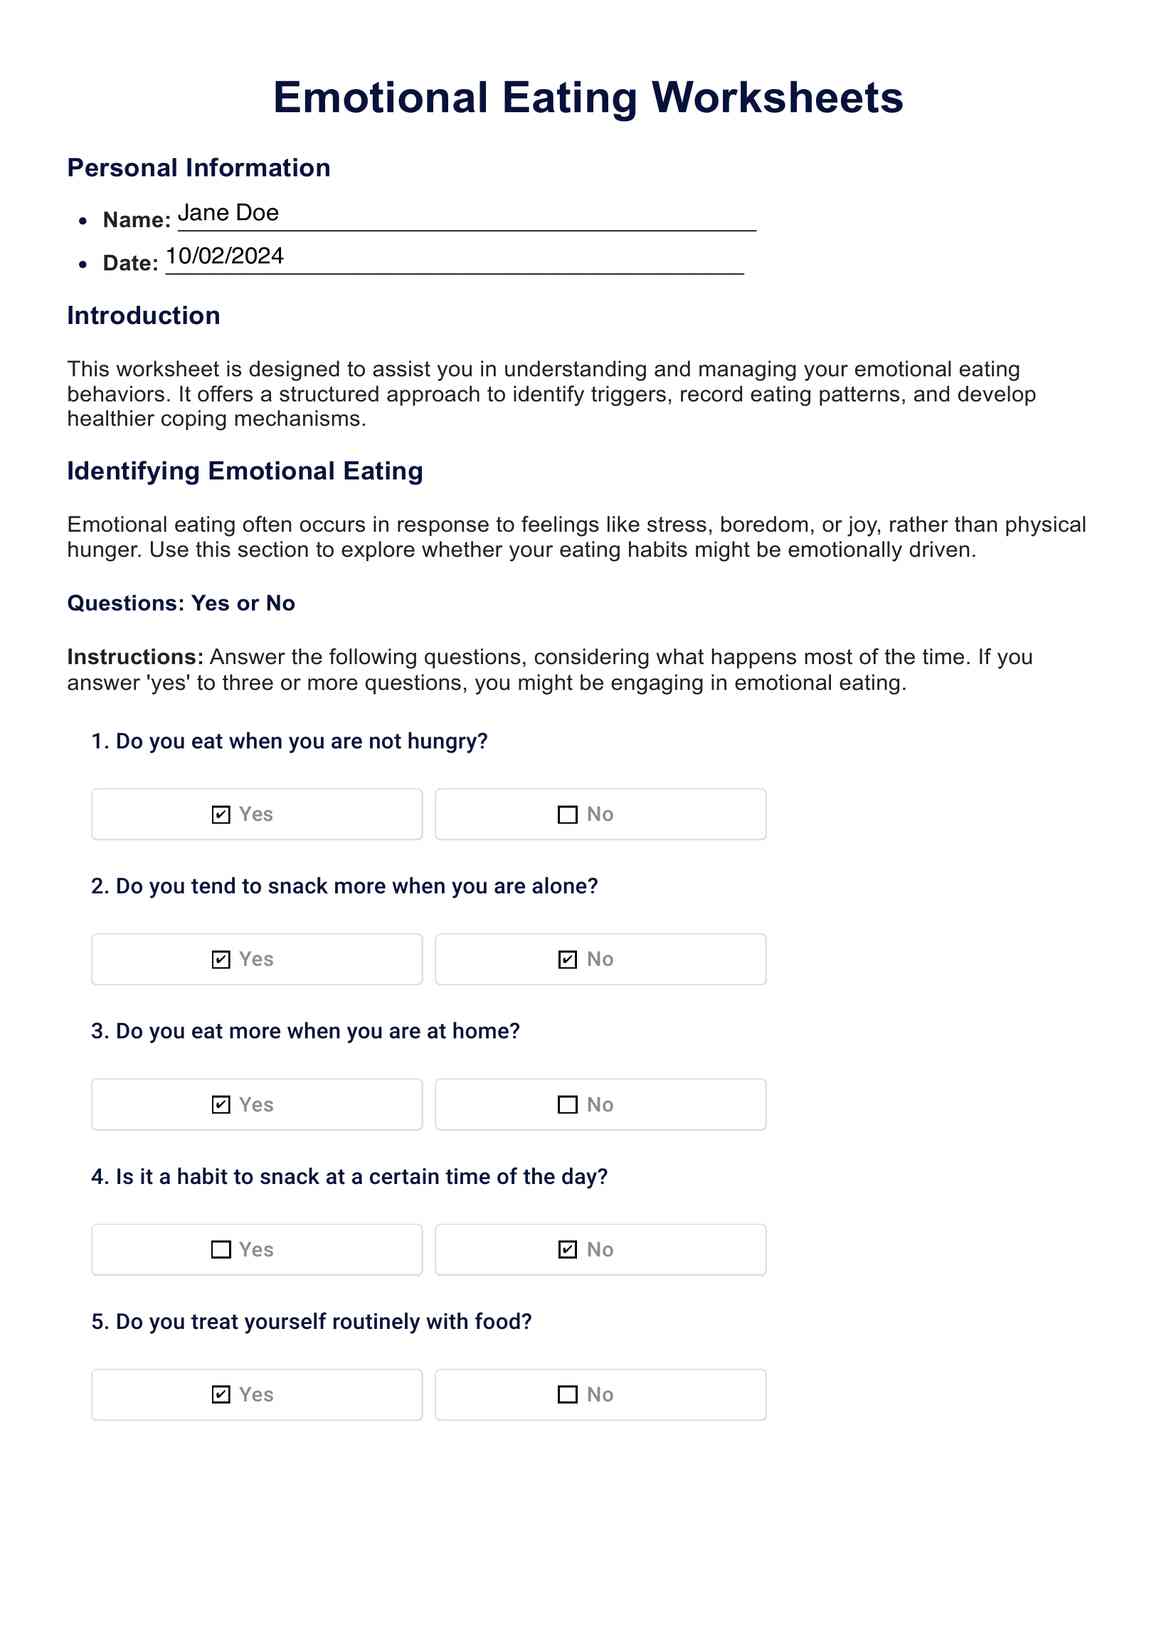 Emotional Eating Worksheets PDF Example